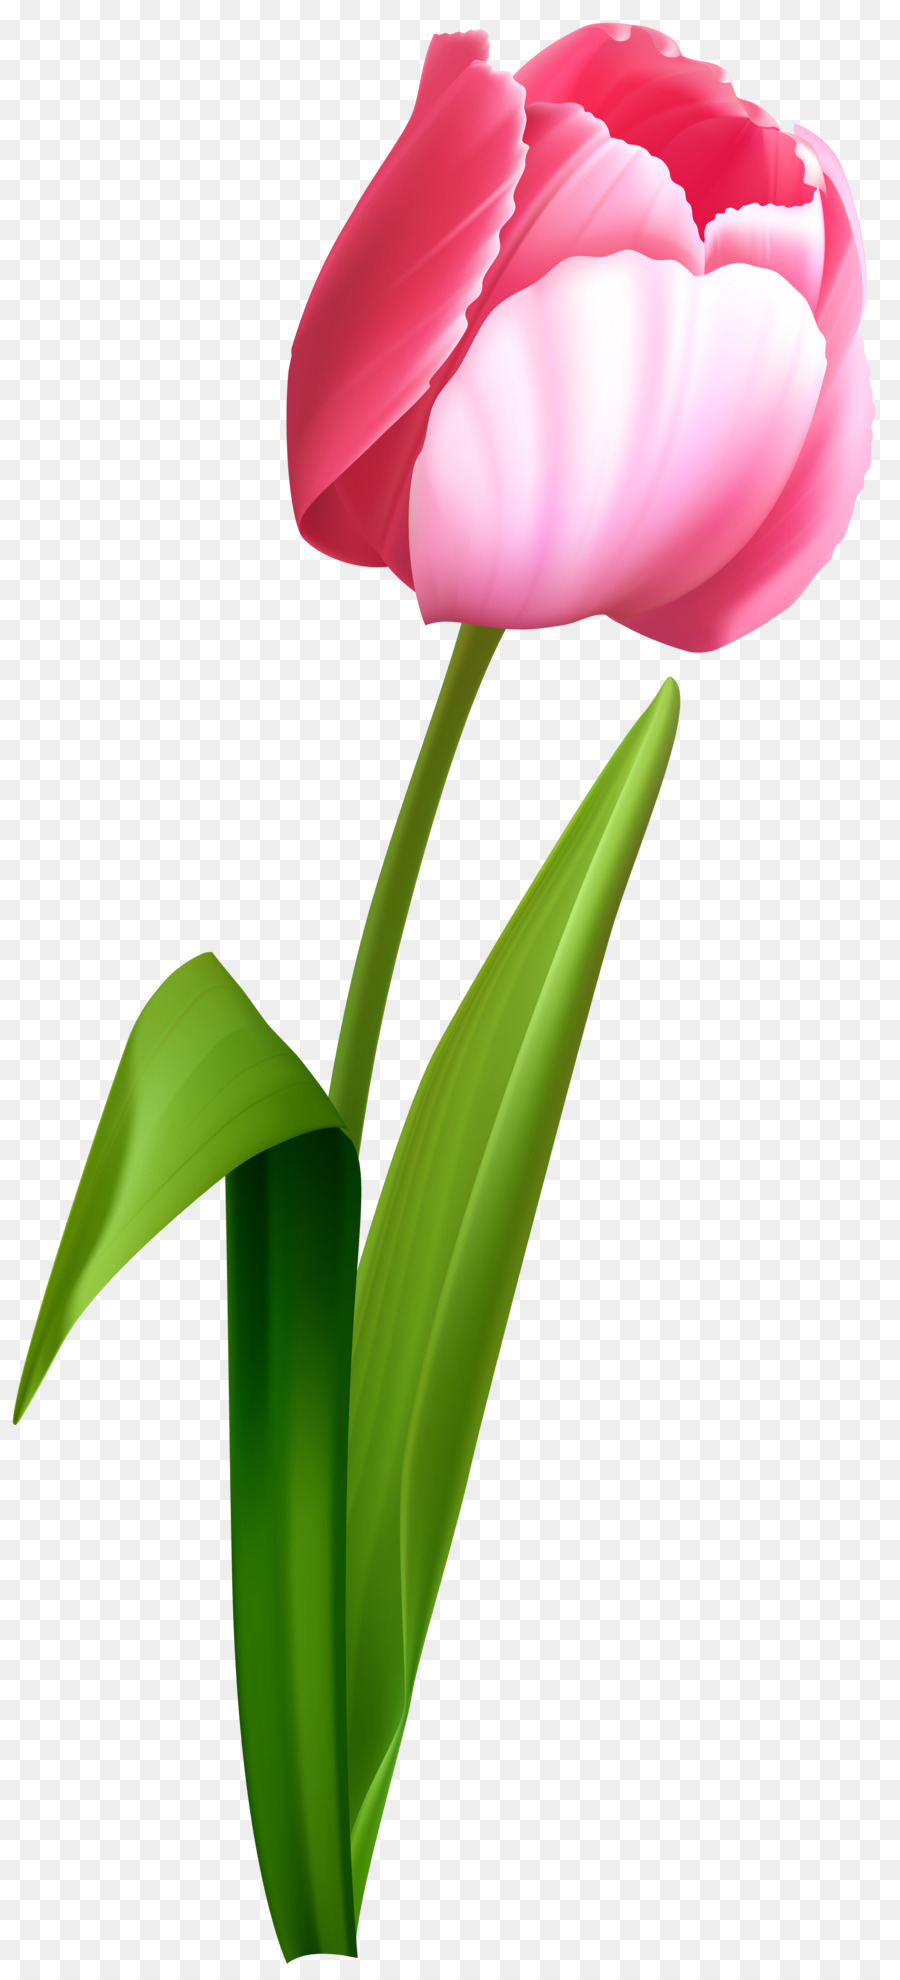 Tulip Desktop Wallpaper Flower Clip art - pink flowers png download - 3657*8000 - Free Transparent Tulip png Download.